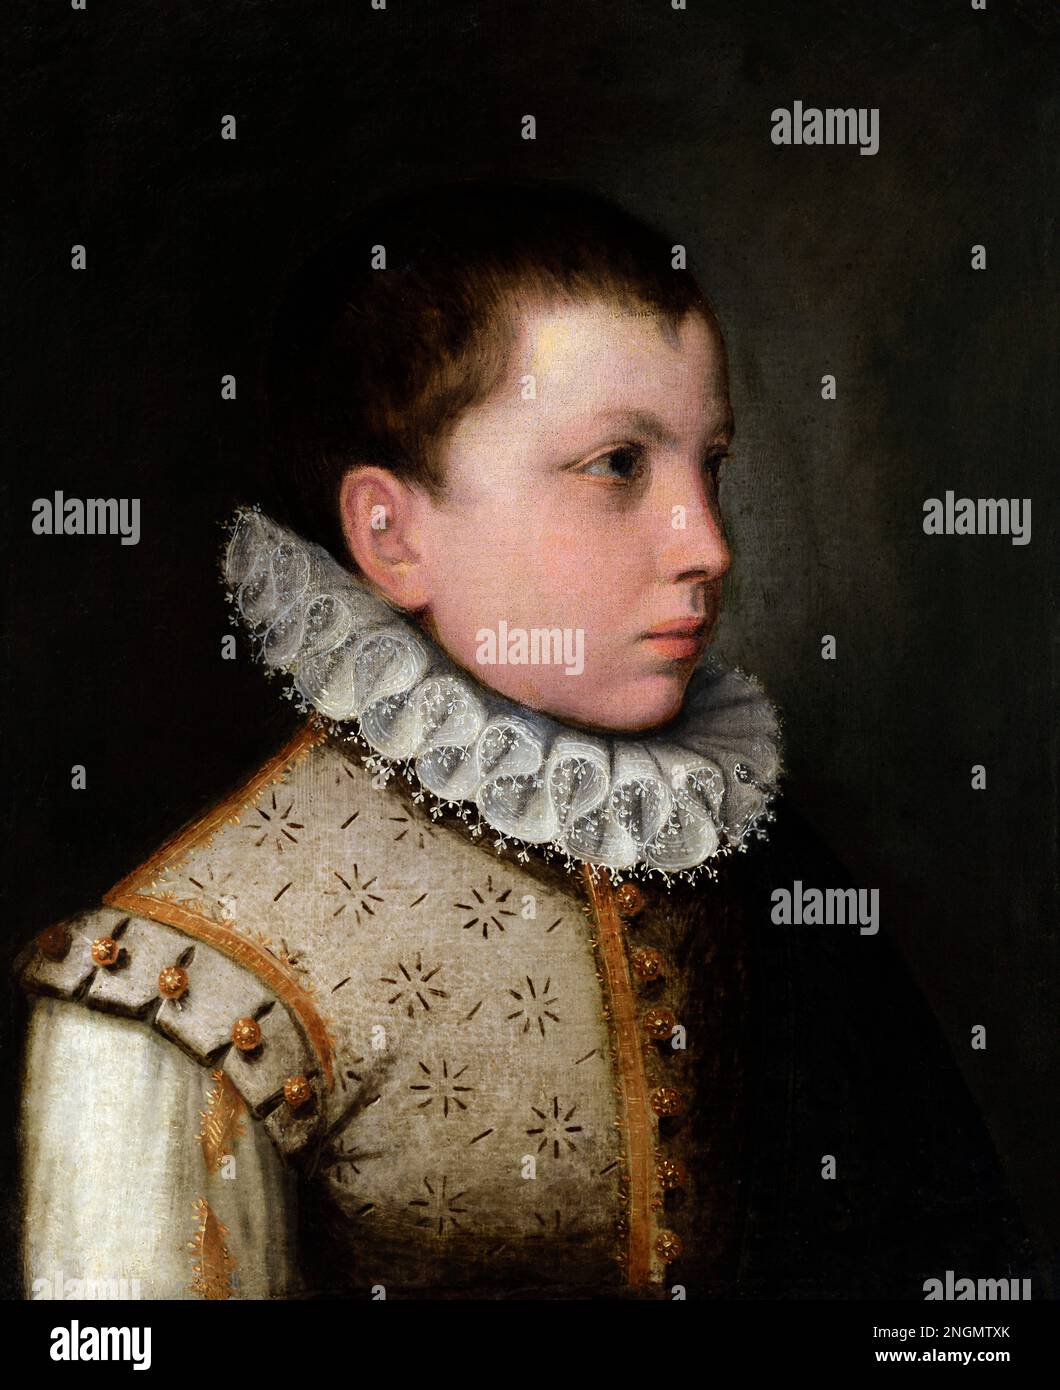 Gonzaga Dynasty's Boy, attributed to Sofonisba Anguissola (c. 1532-1625). Stock Photo